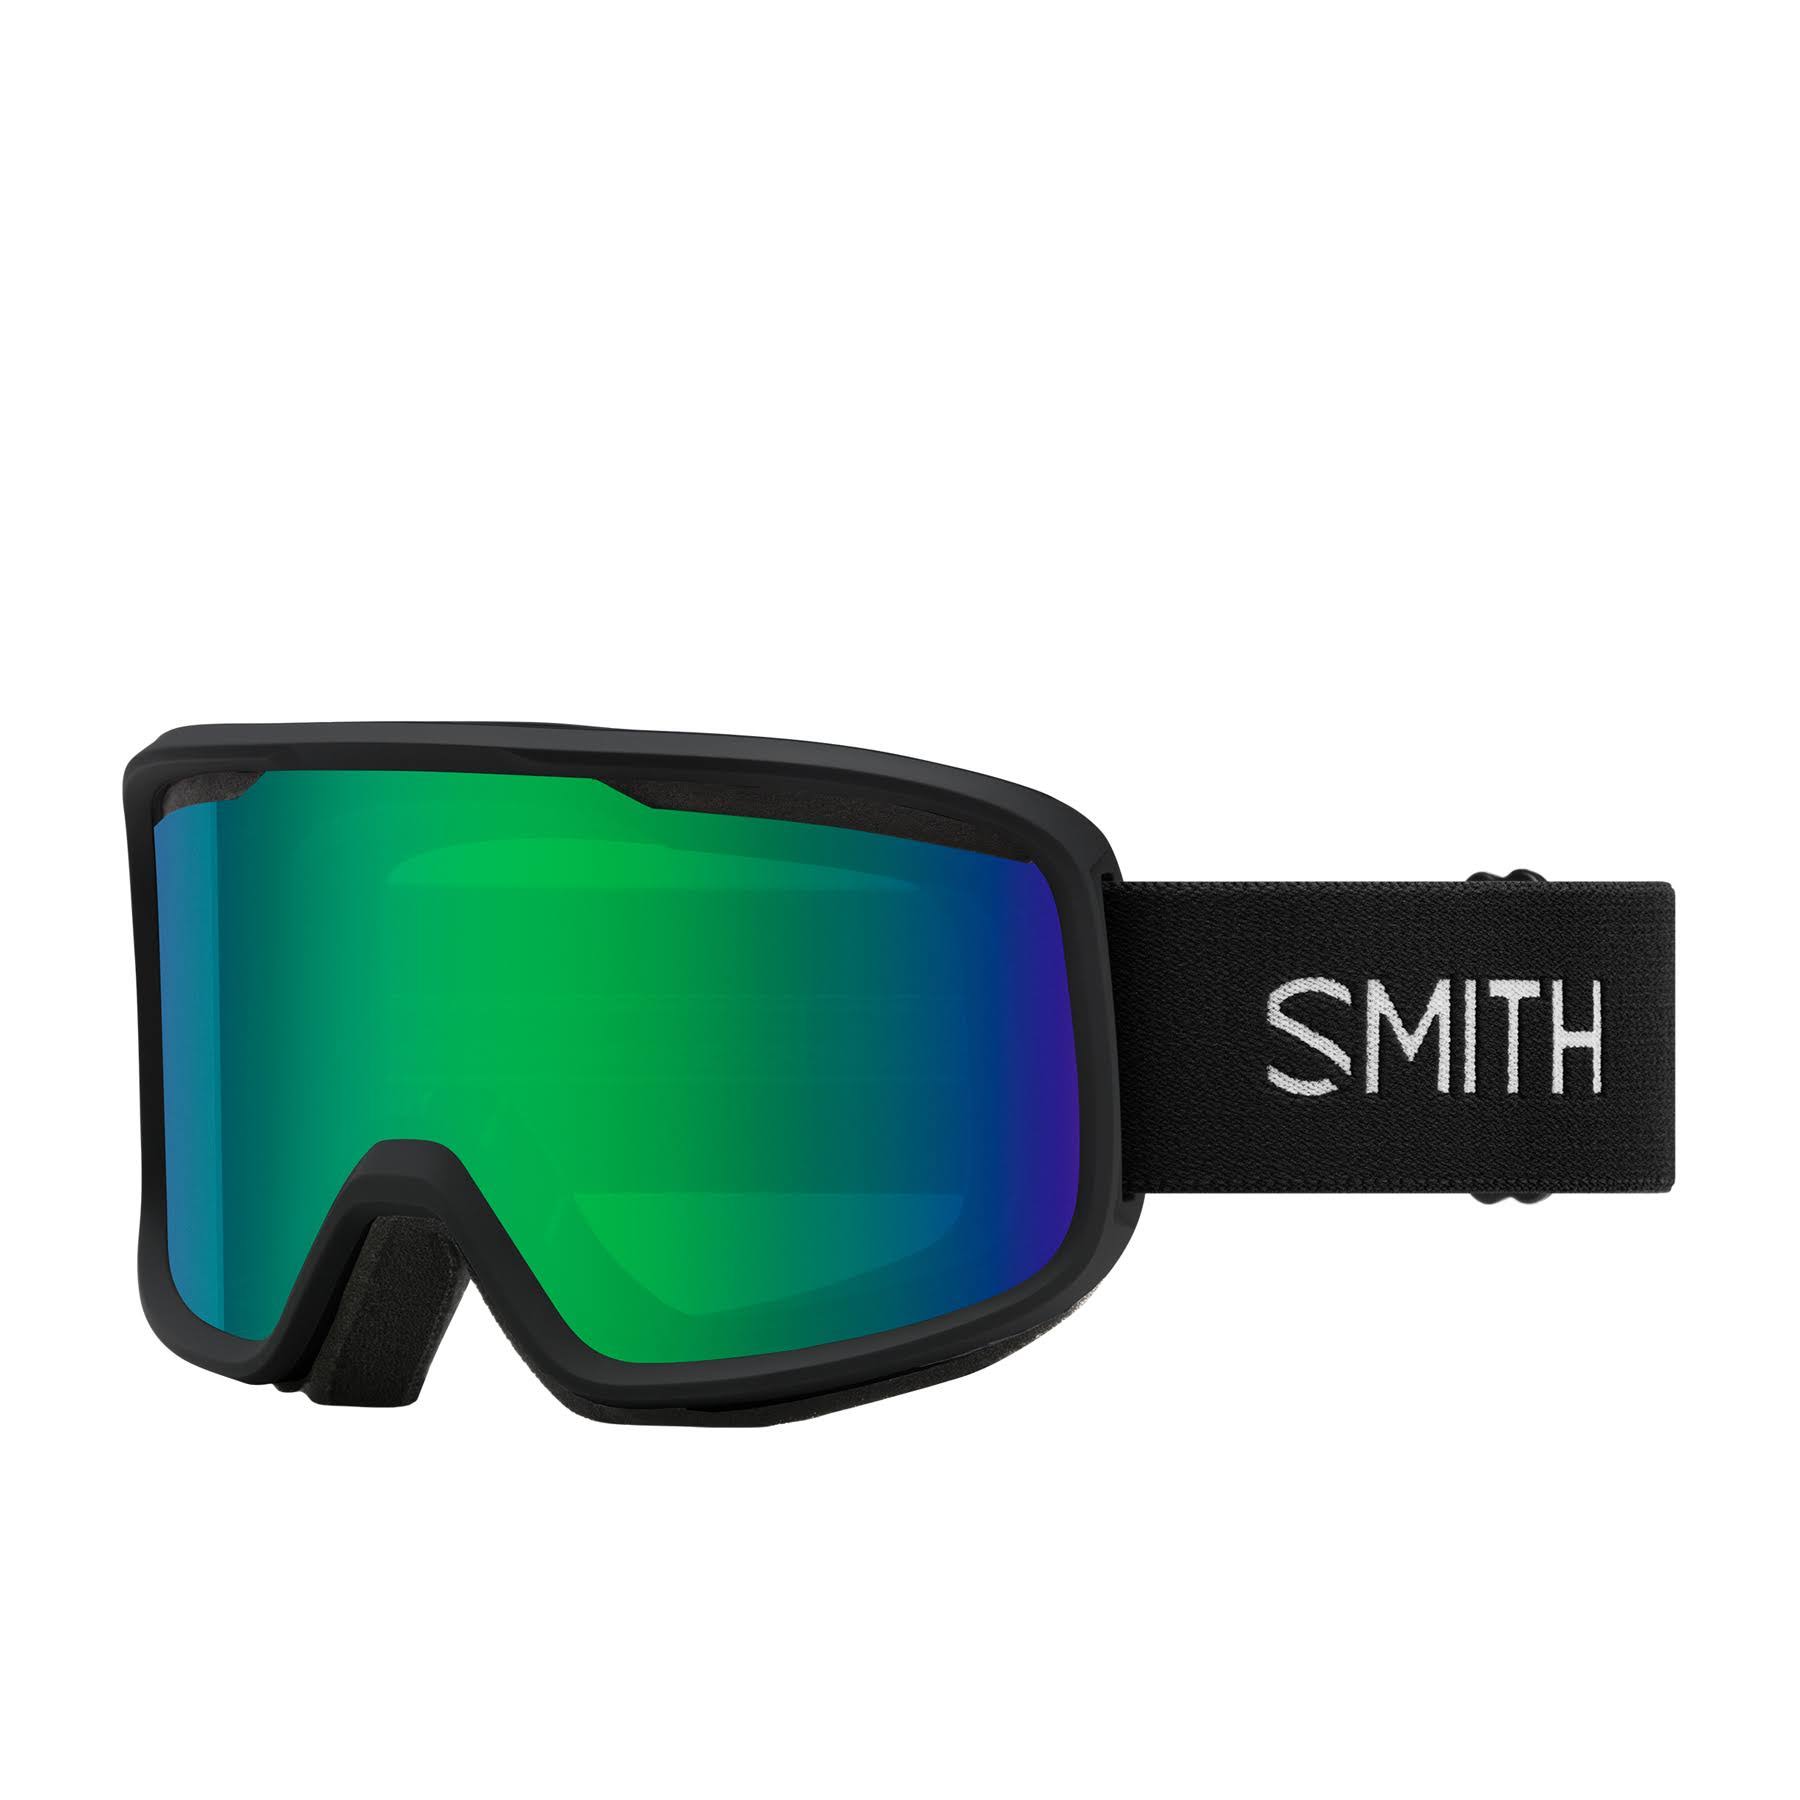 Smith Frontier Goggles - Black/Green Sol-X Mirror